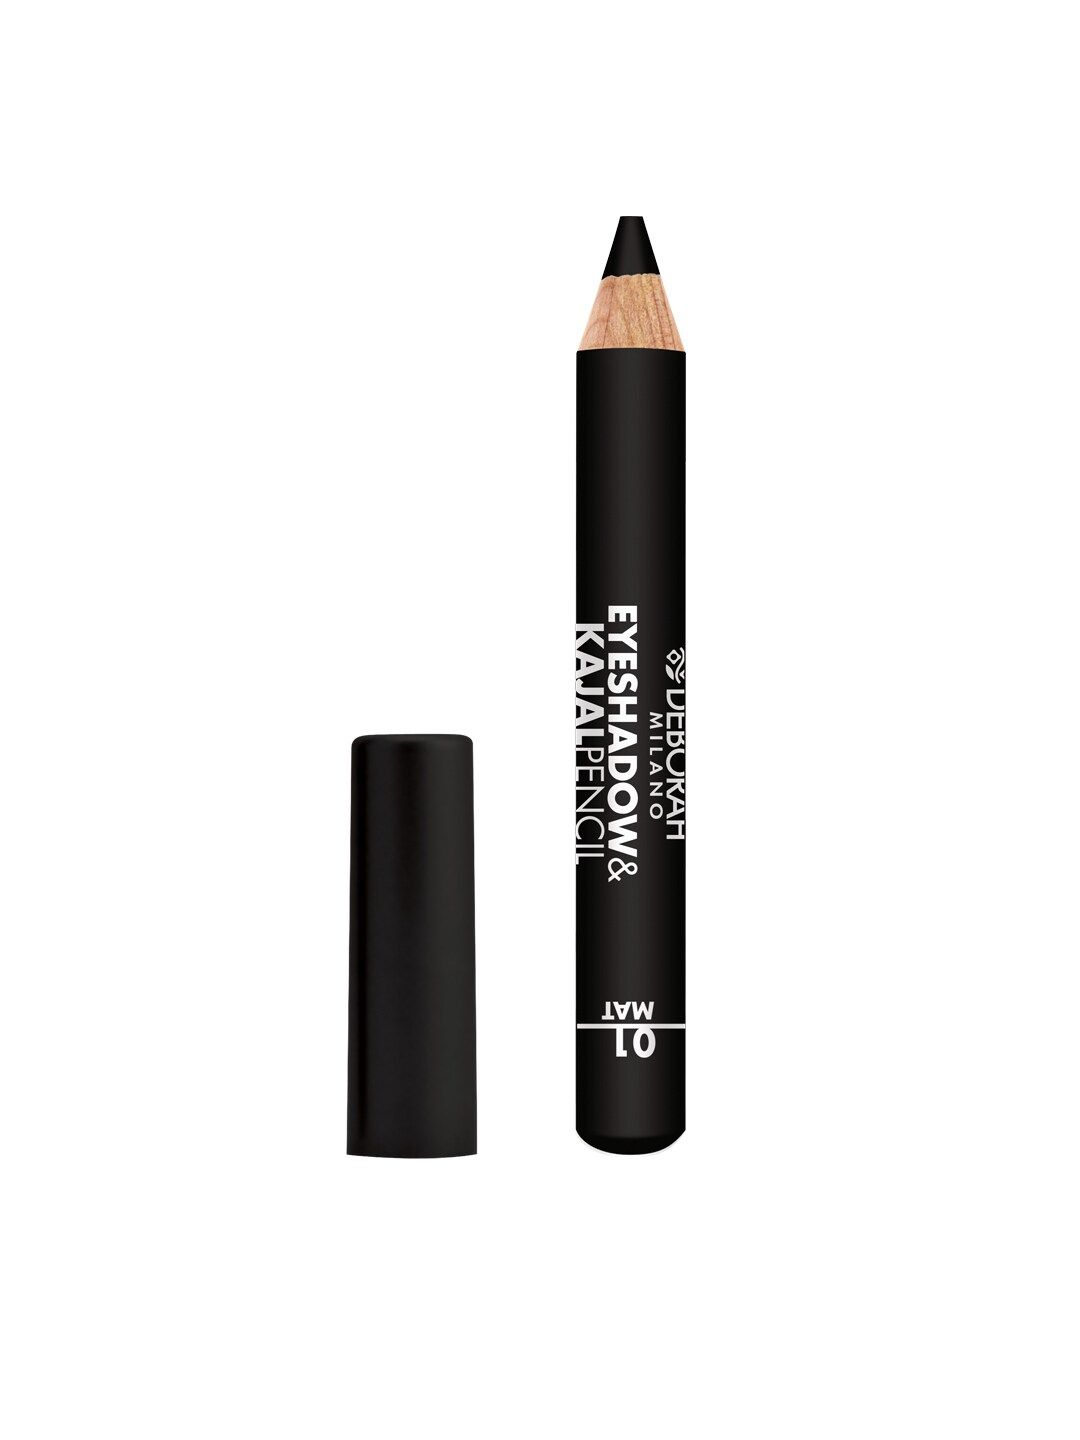 Deborah Milano 01 MAT BLACK Eyeshadow & Kajal Pencil 2 g Price in India